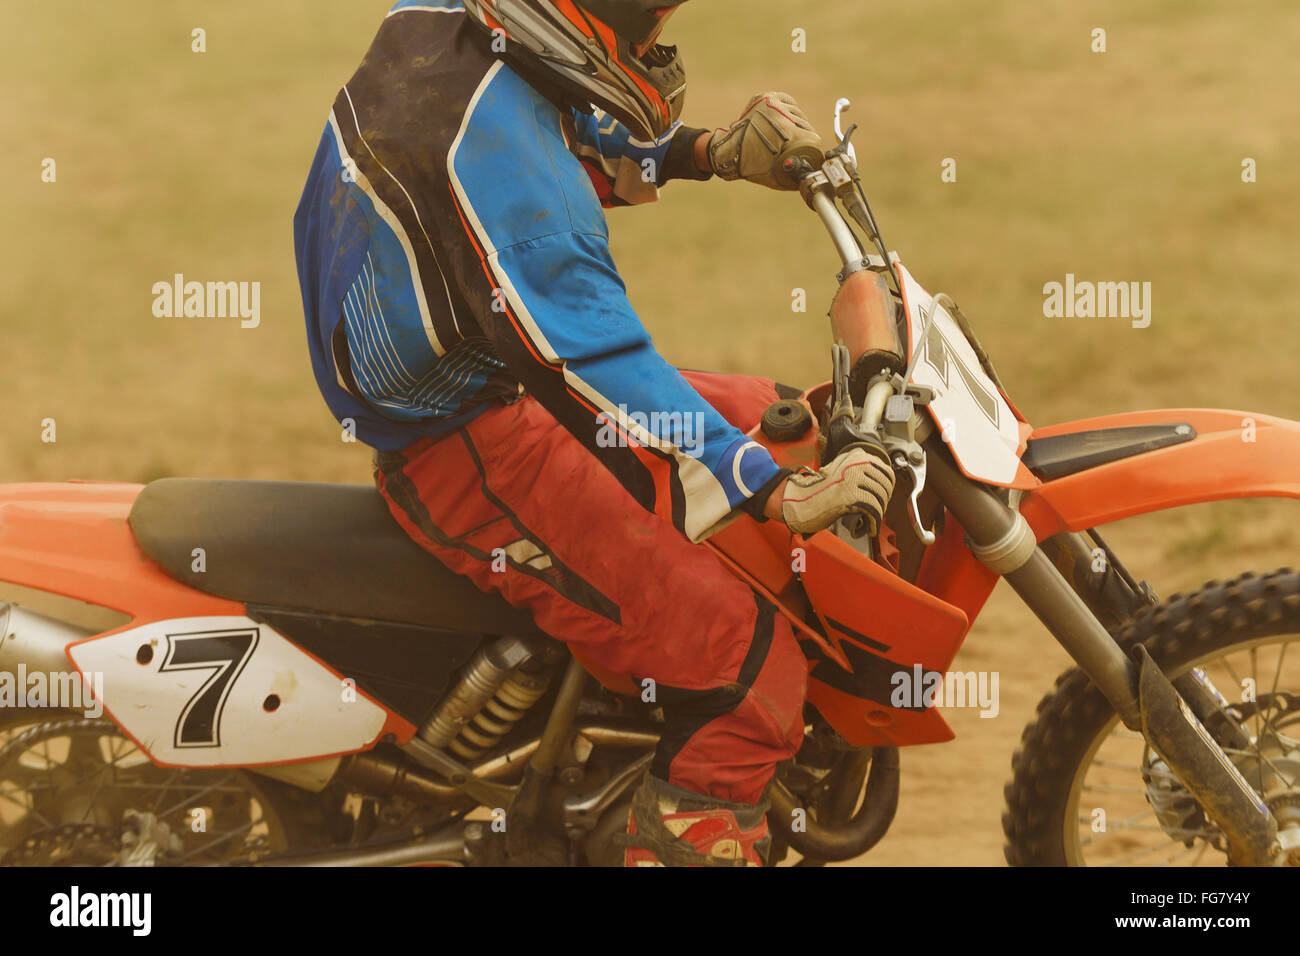 motocross bike Stock Photo